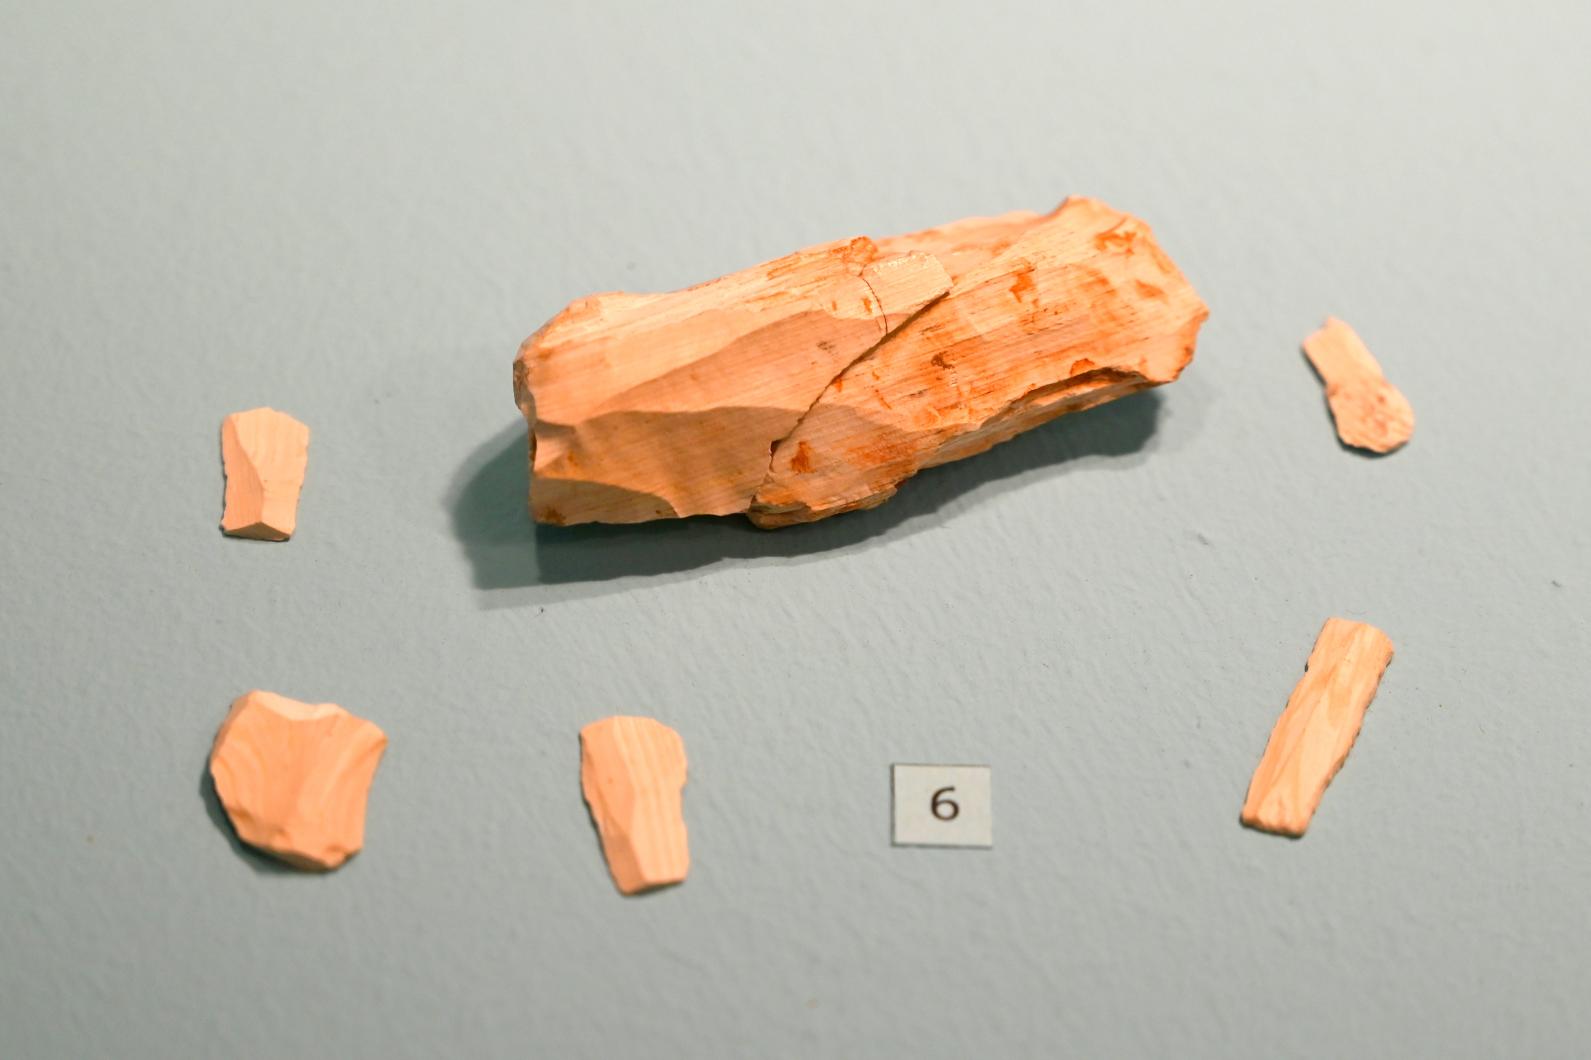 Rückenmesser, 23000 v. Chr., Bild 1/2